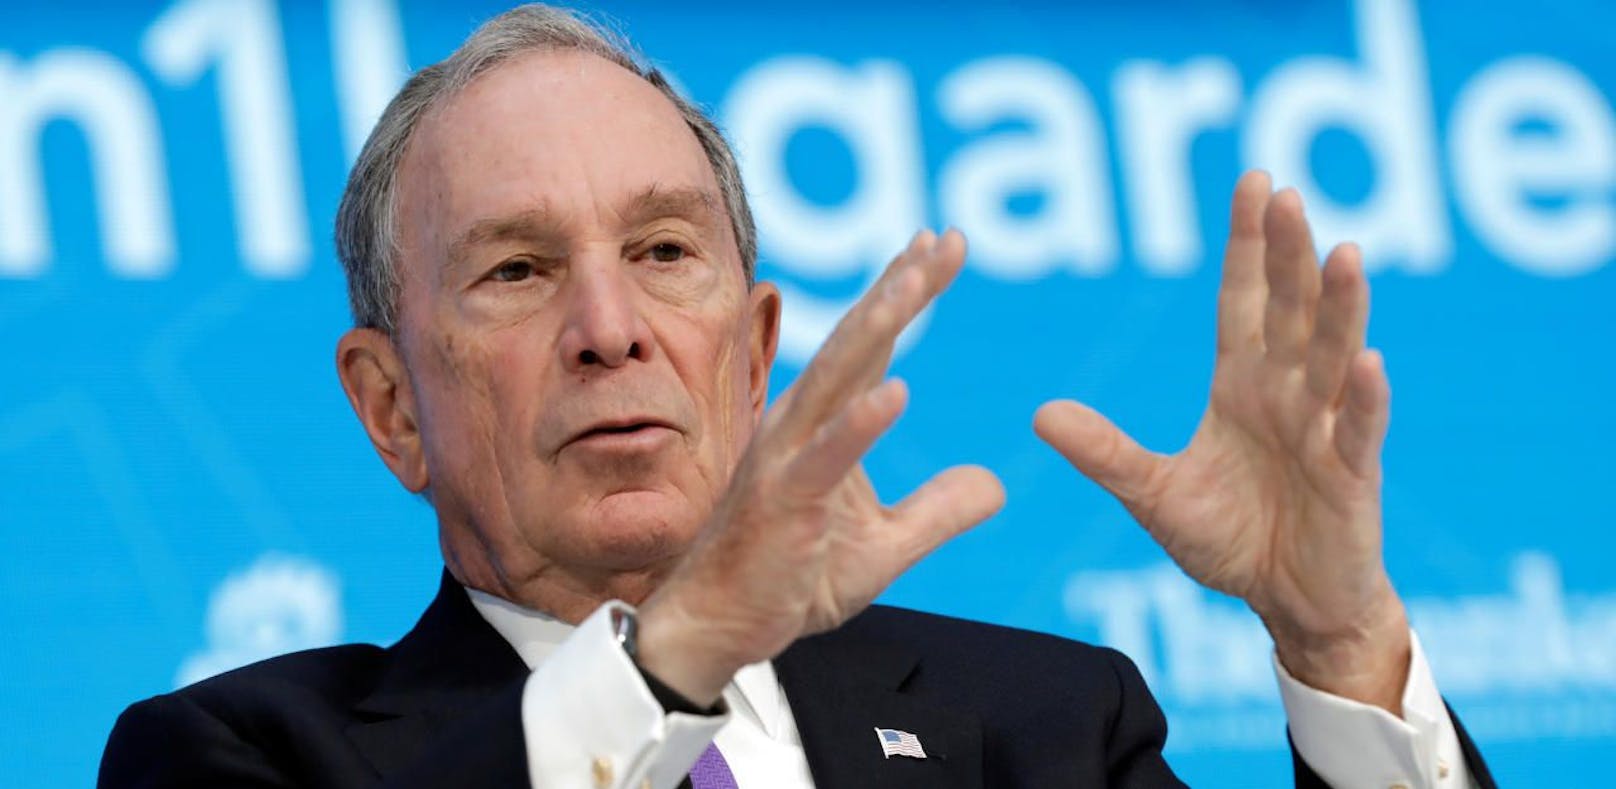 Milliardär Bloomberg will gegen Trump antreten